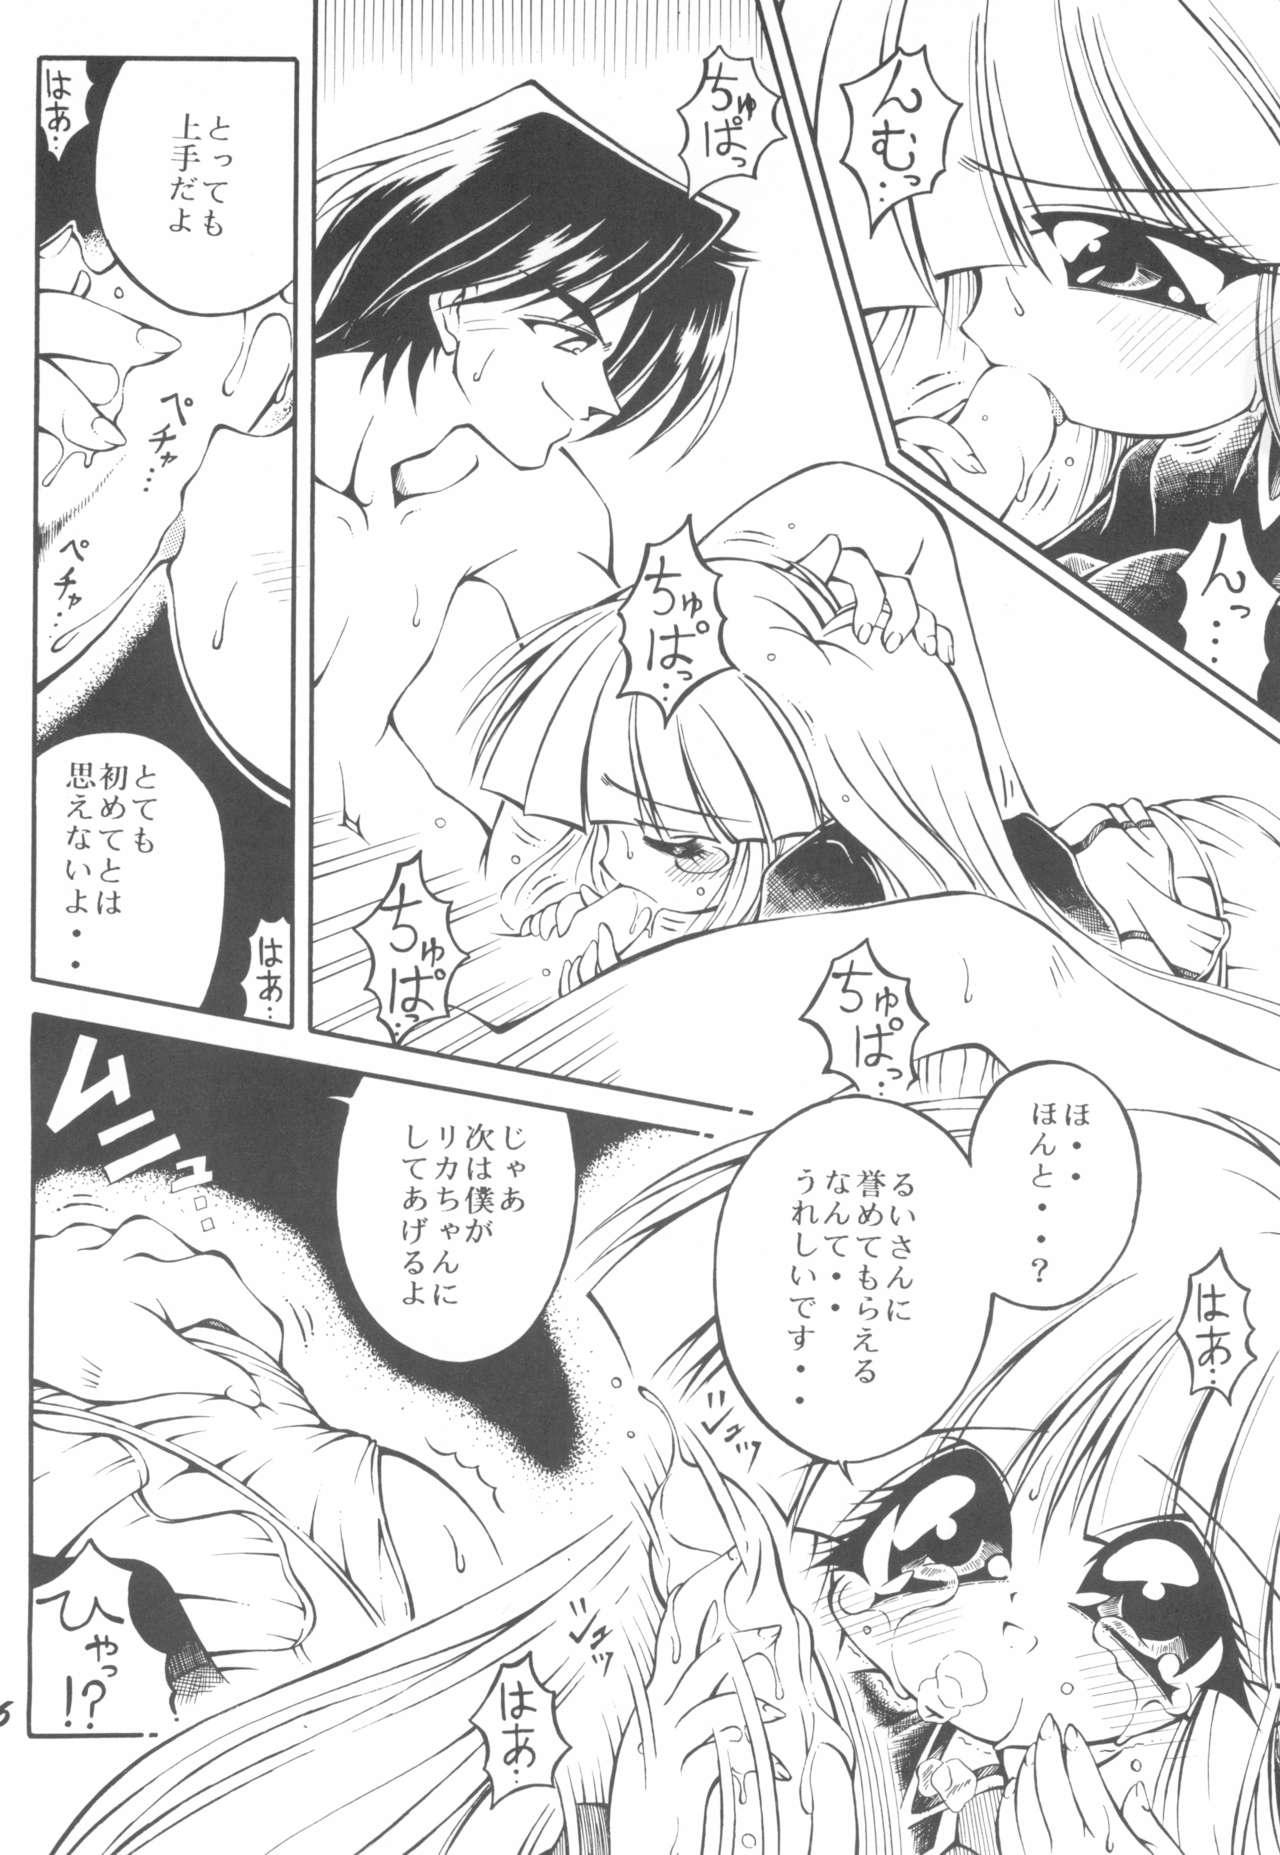 Thong Hanahiraki Mebae no Toki STEP - Super doll licca chan Legs - Page 6